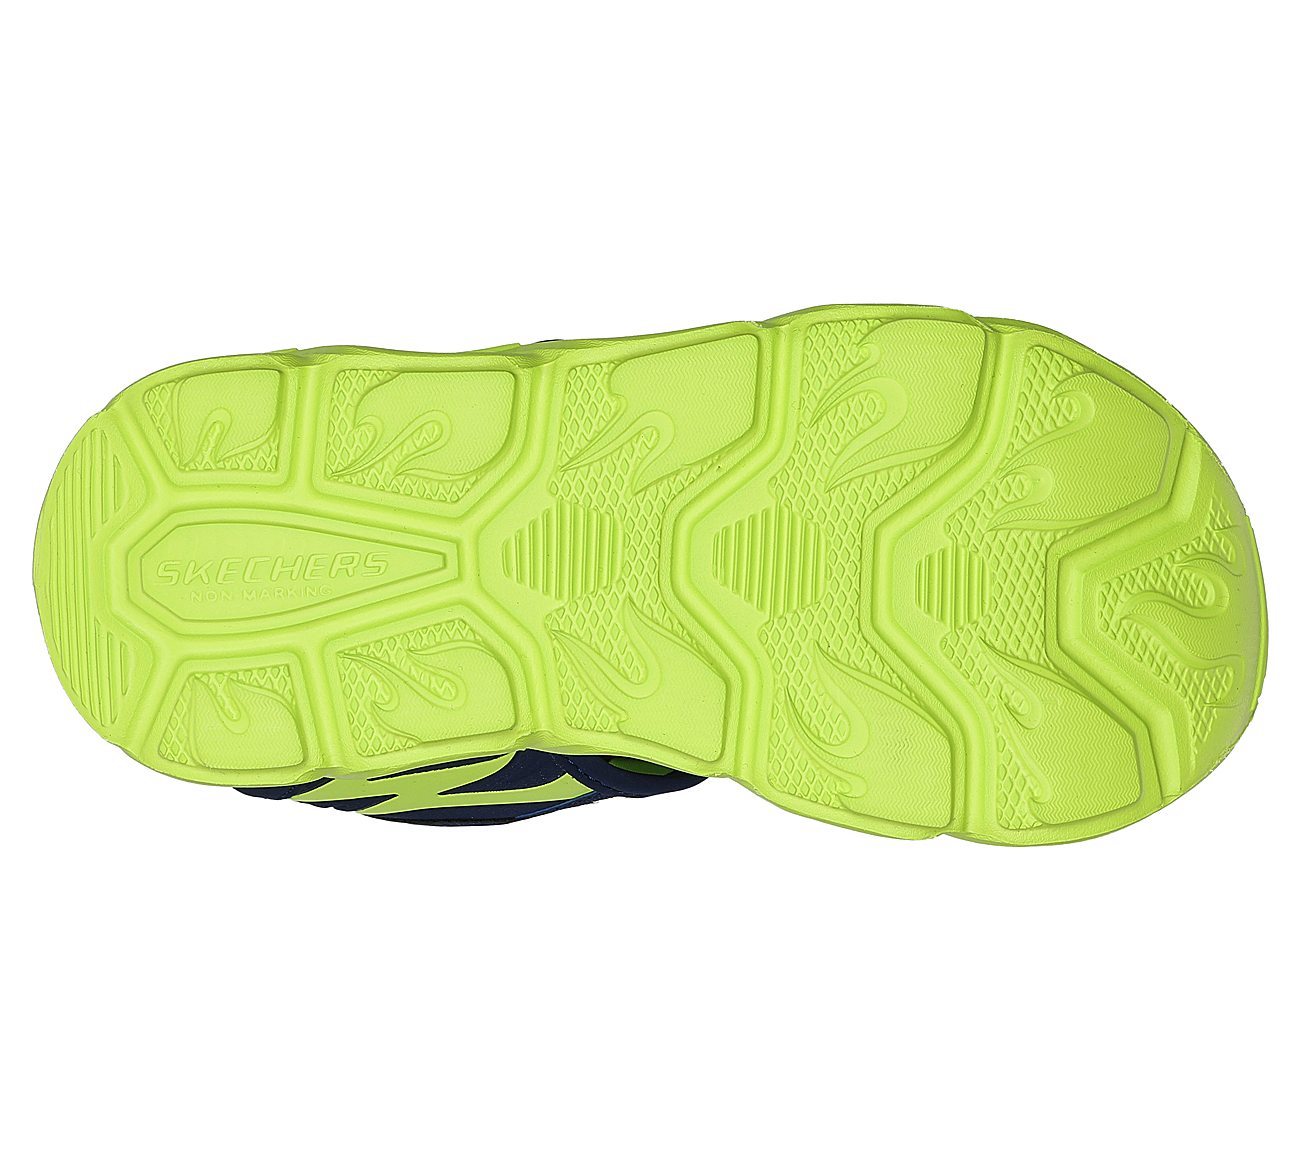 THERMO-SPLASH - HEAT TIDE, NAVY/LIME Footwear Bottom View